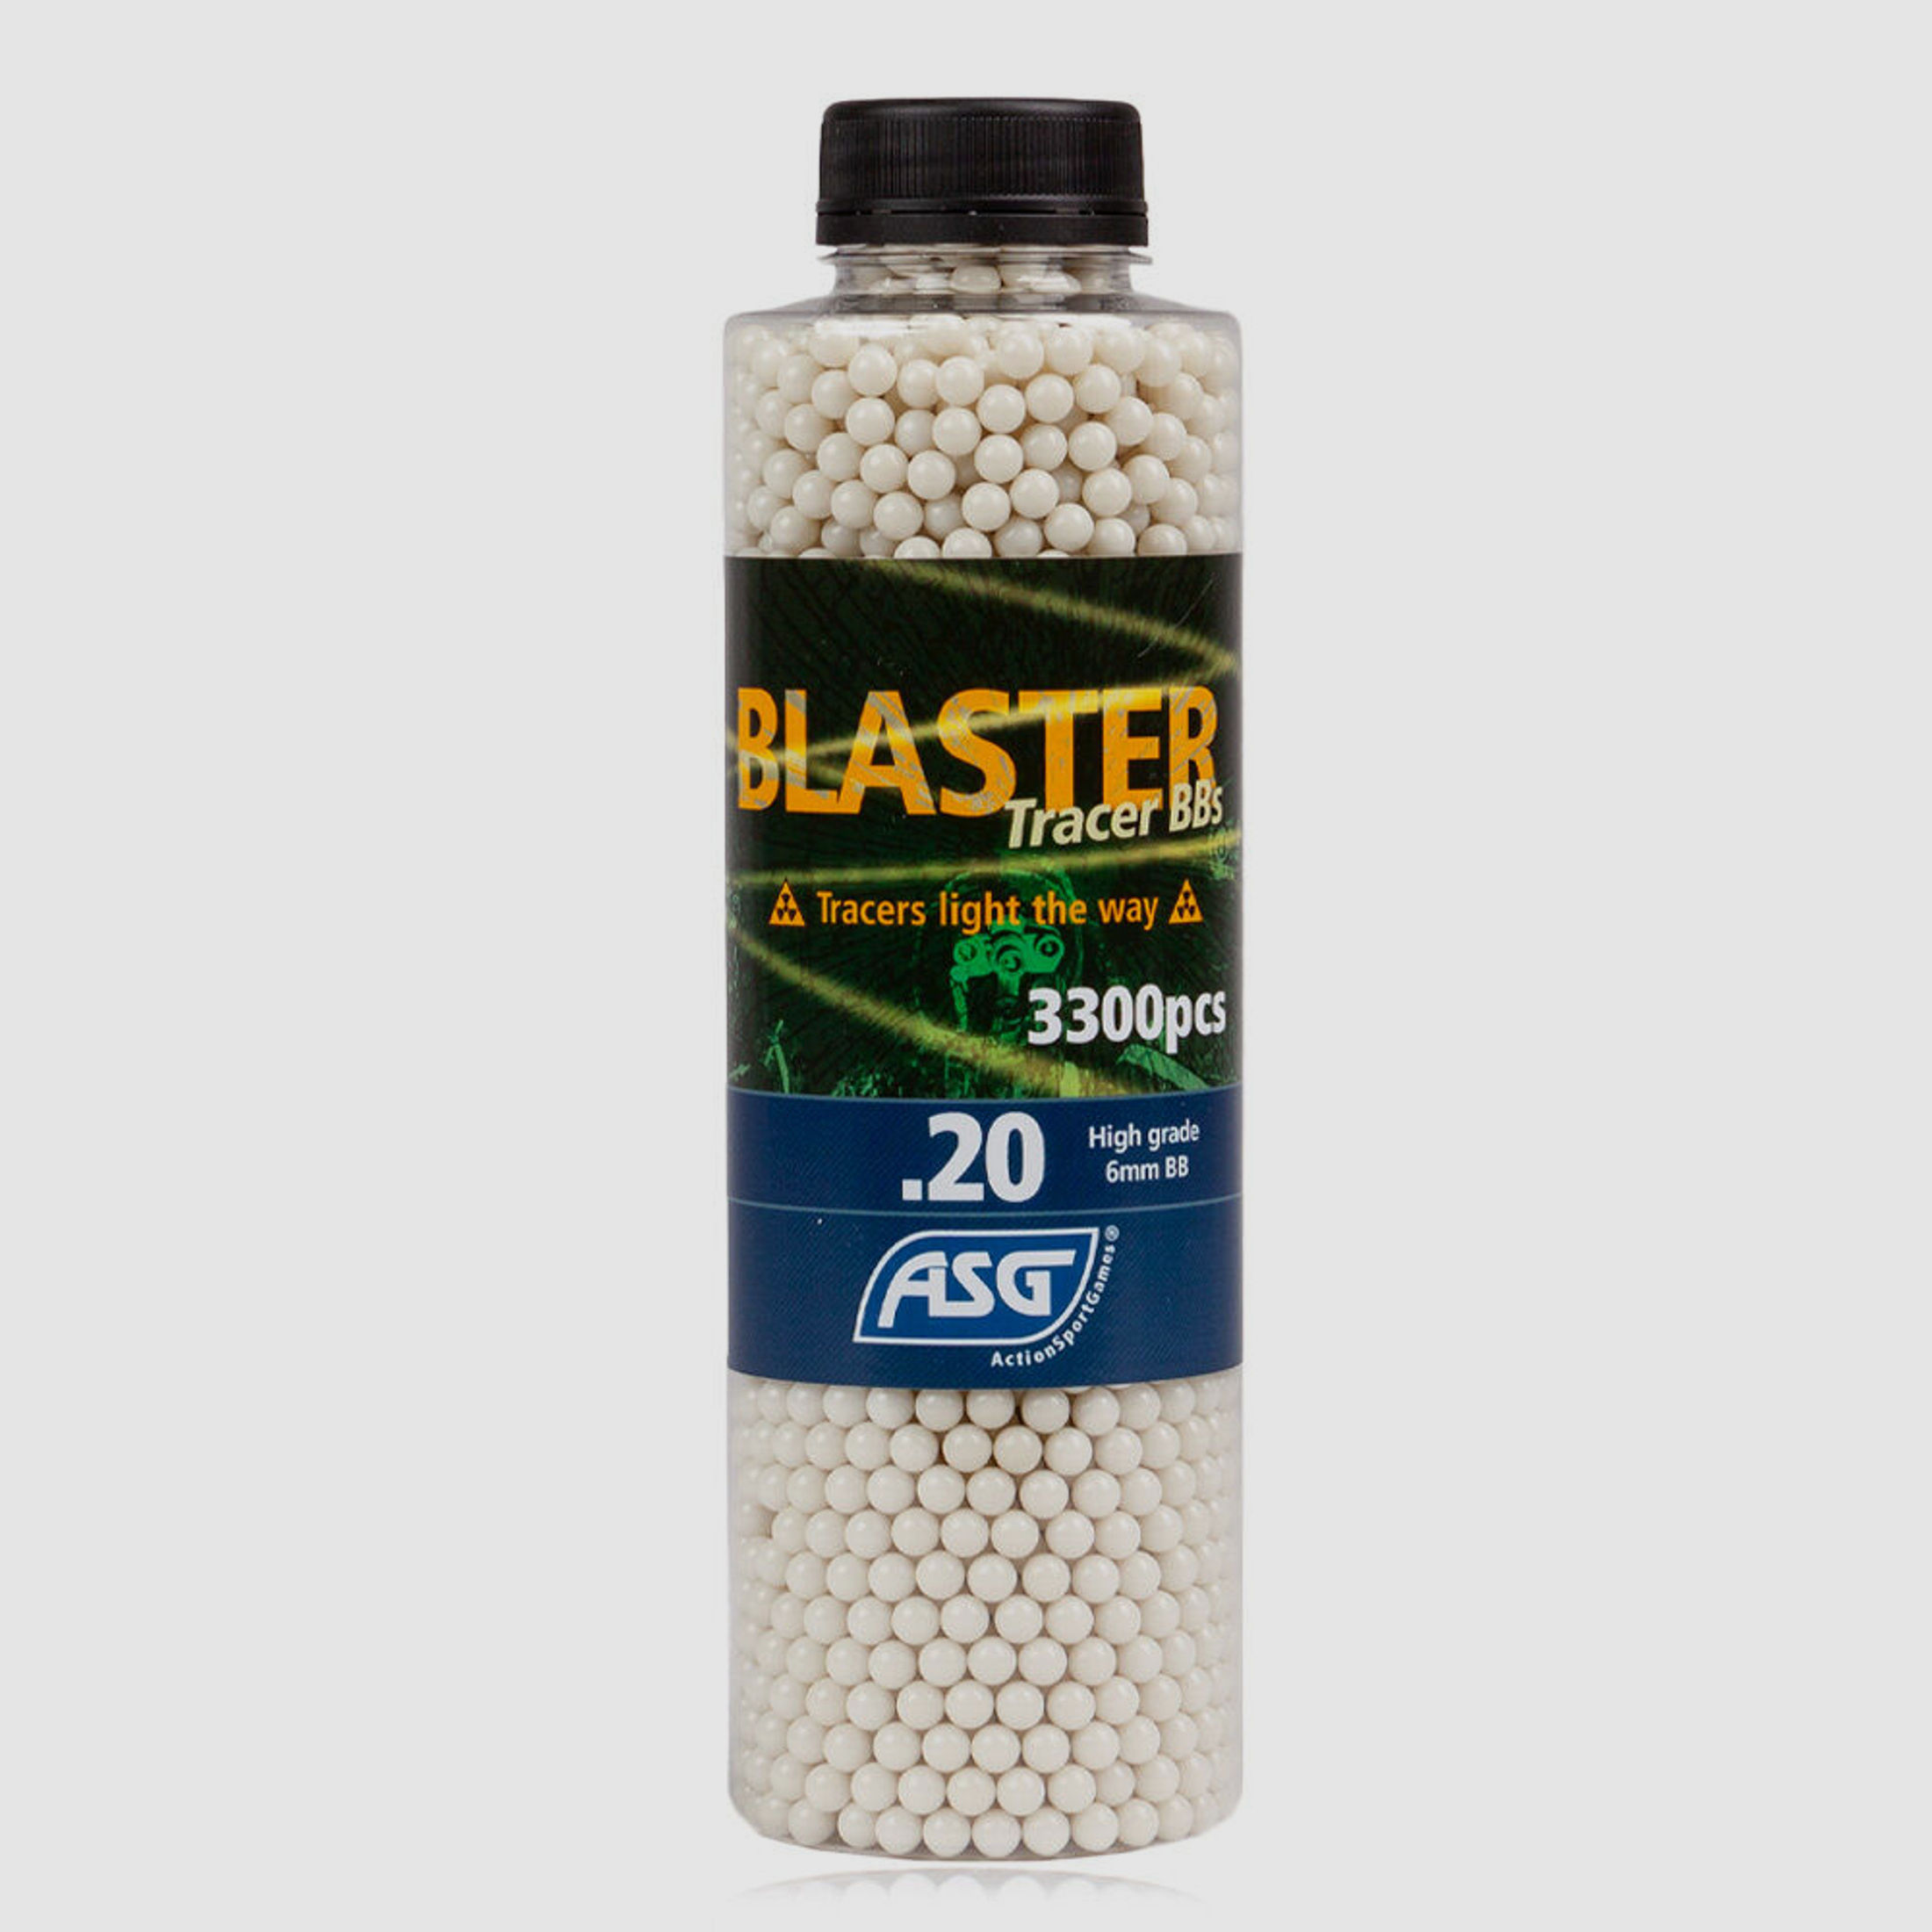 ASG	 Blaster Tracer BB 3300 Stk. 6mm / 0,20g / TRACER /GREEN